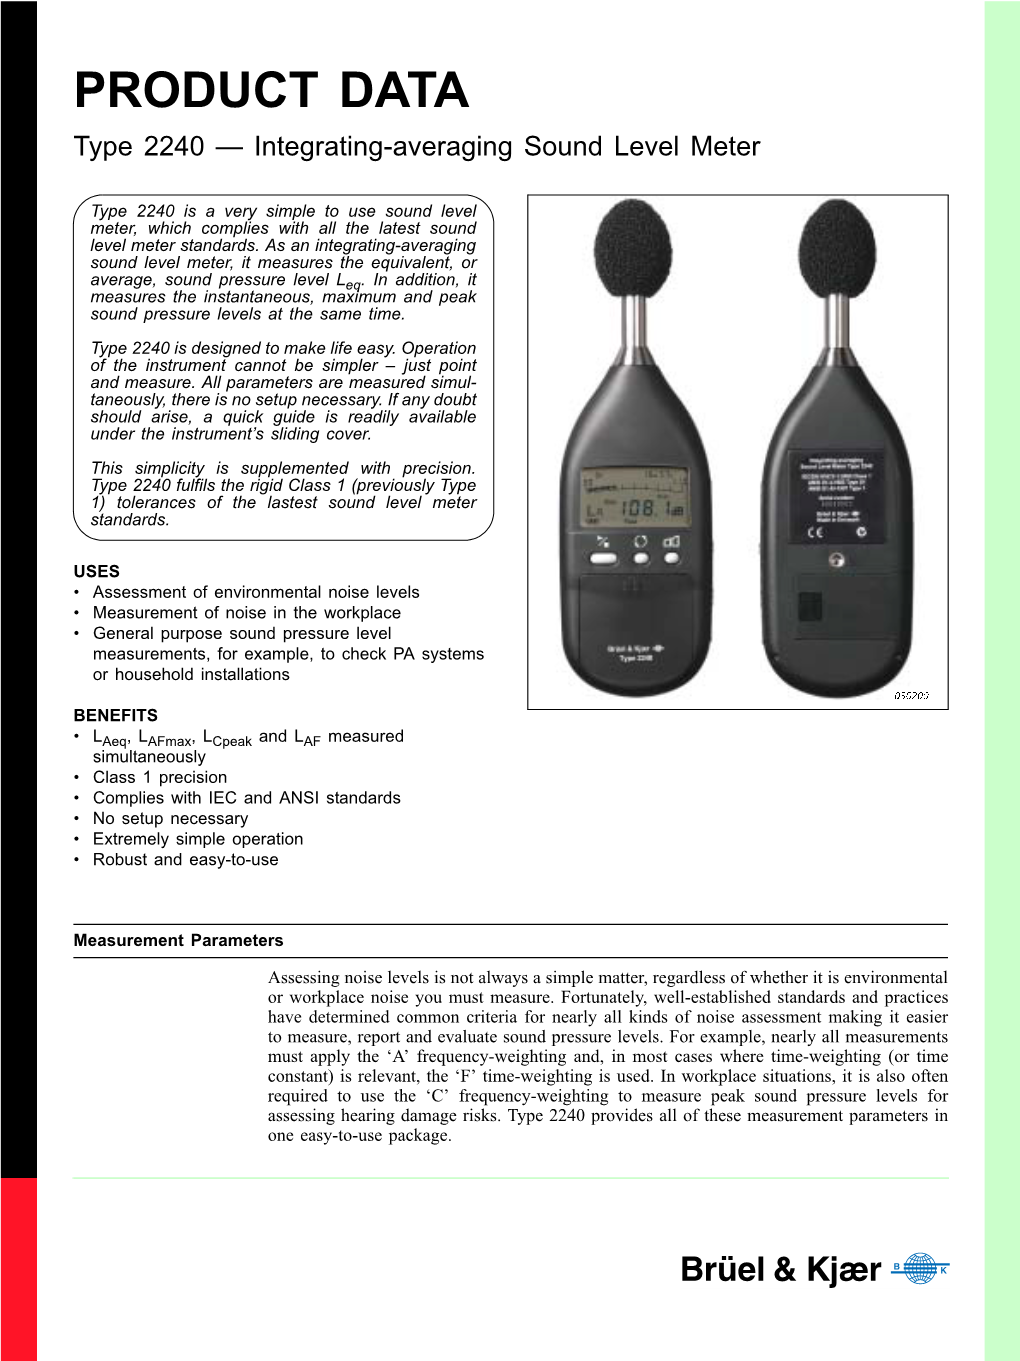 Product Data: Integrating Averaging Sound Level Meter Type 2240